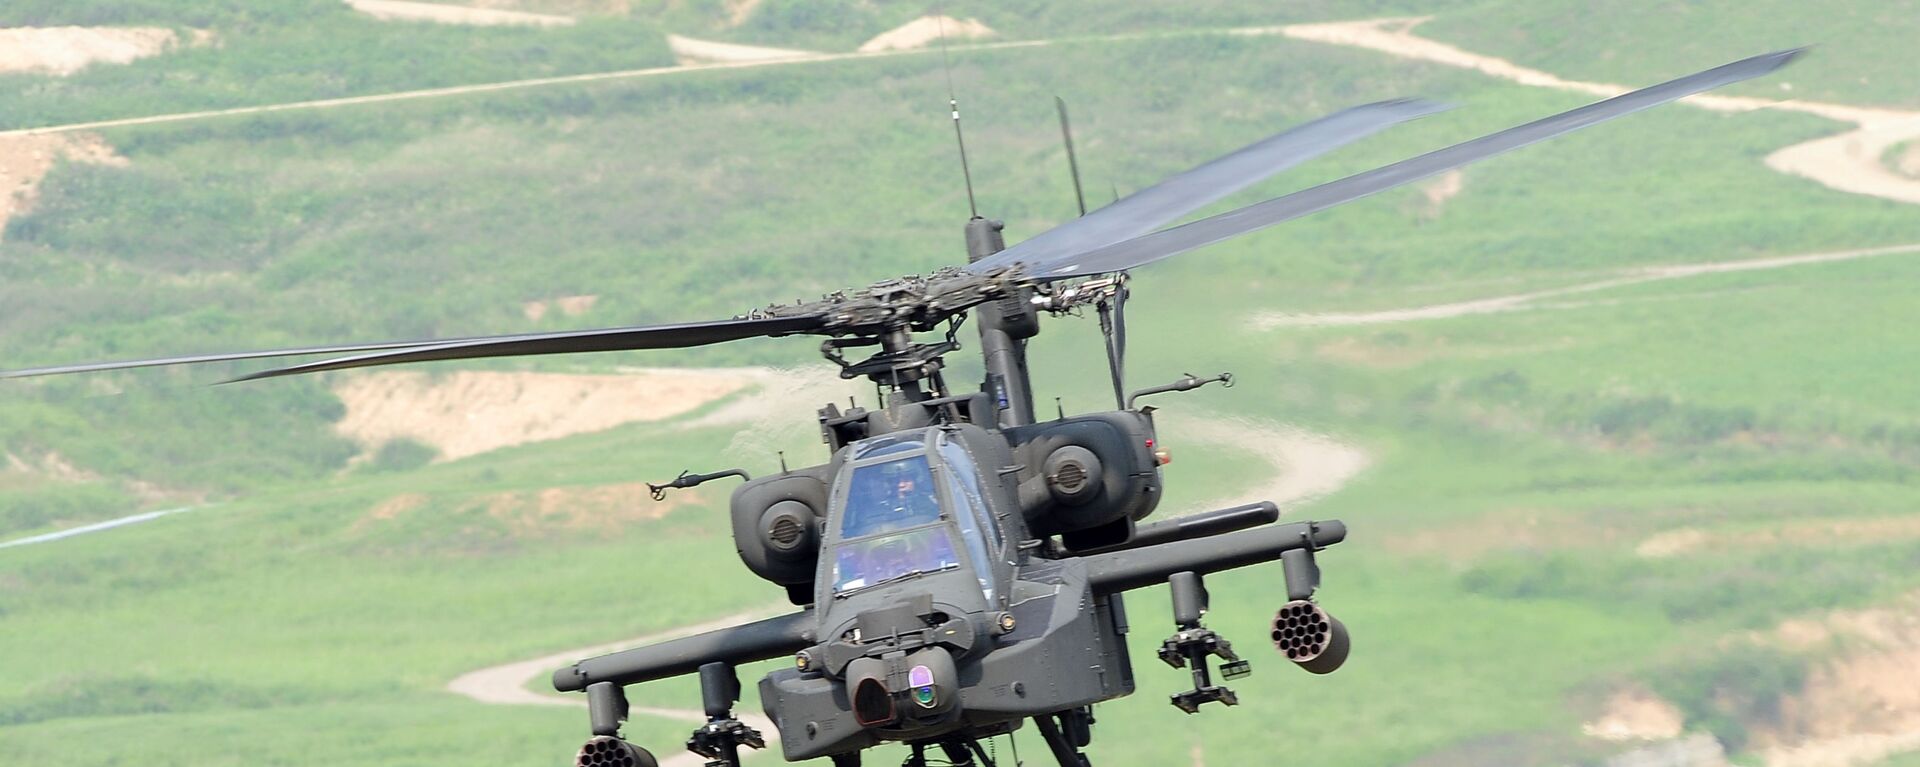 Apache AH-64E （阿帕奇） - 俄罗斯卫星通讯社, 1920, 30.11.2021